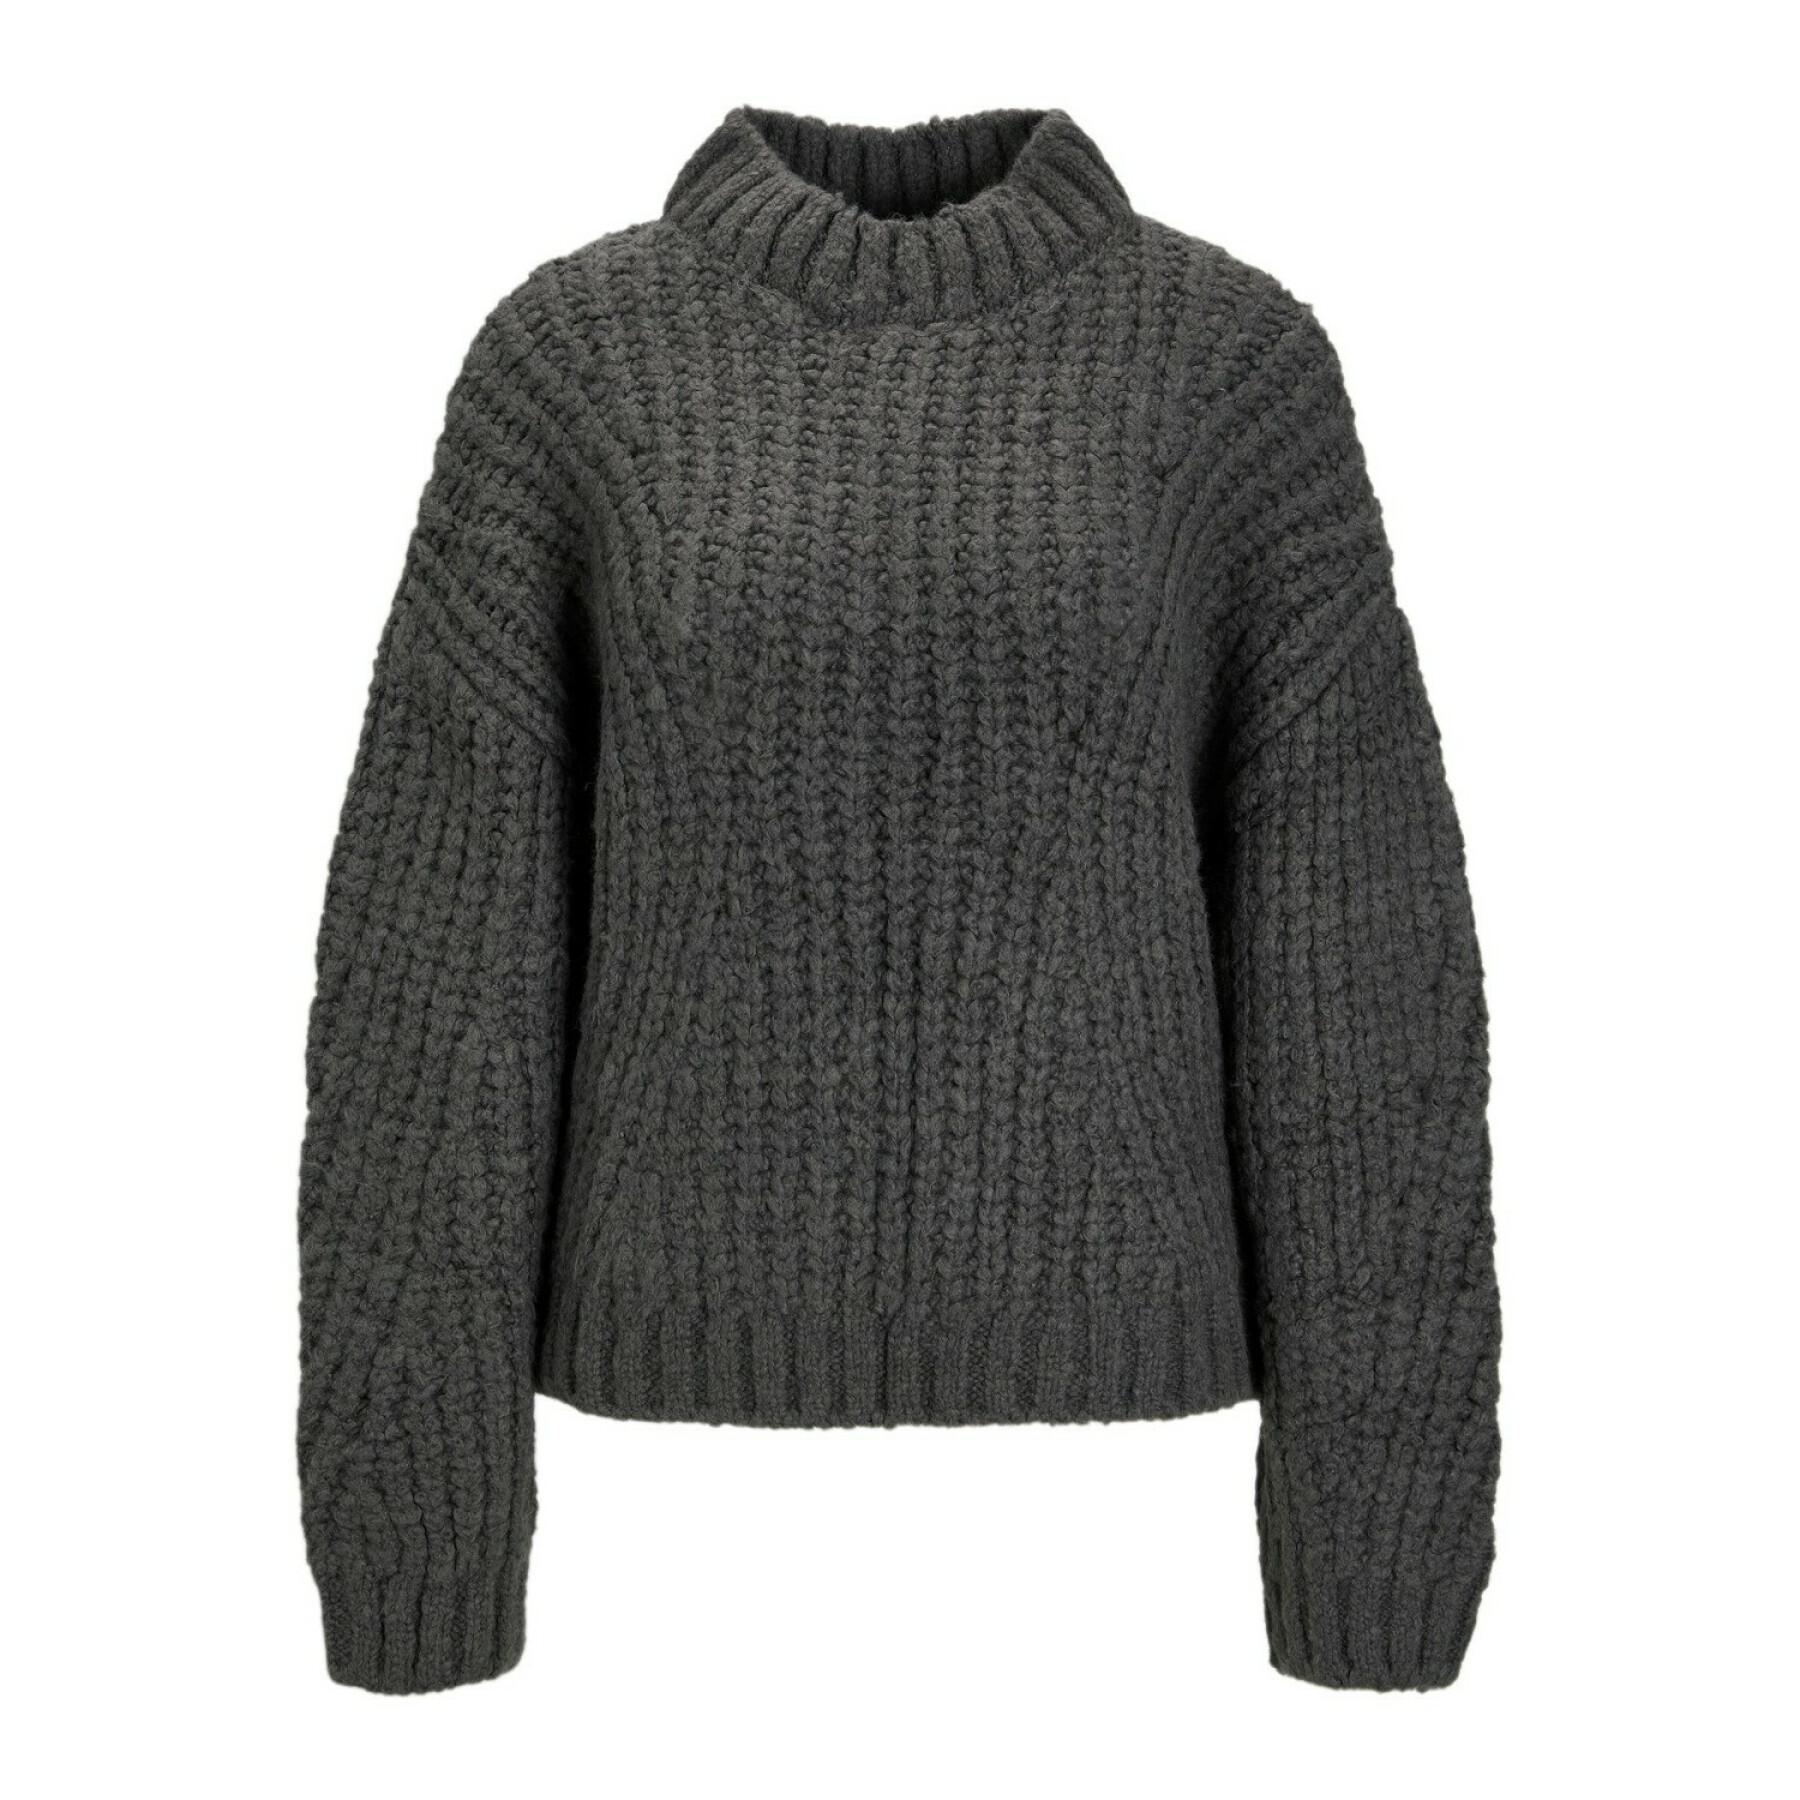 Women's long-sleeved sweater JJXX maxime